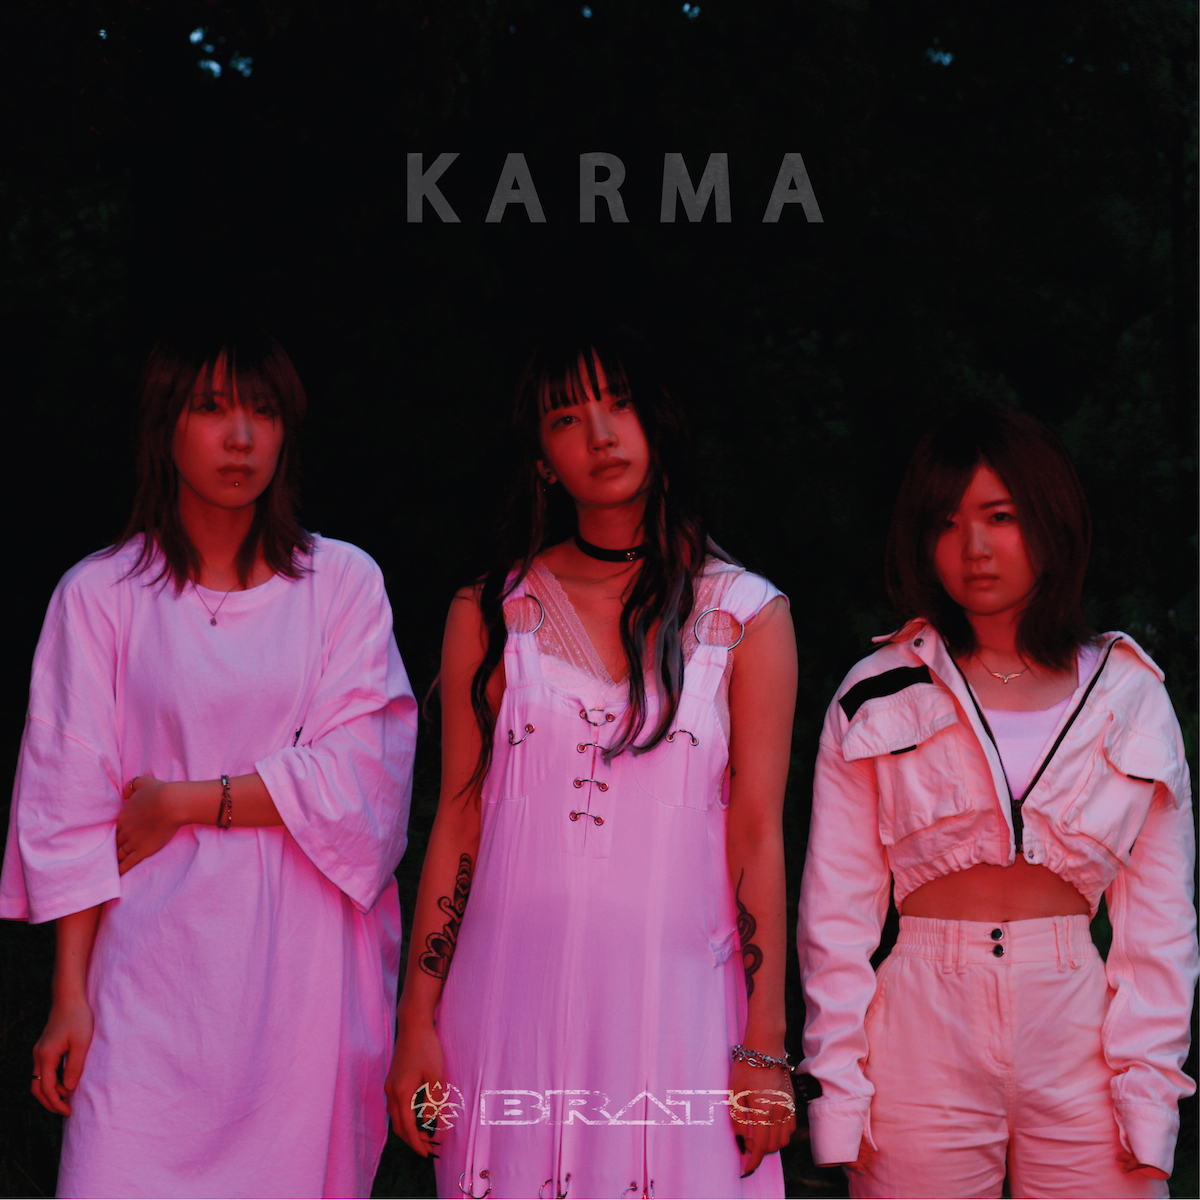 BRATS、NEW ALBUM『Karma』のジャケット画像及び収録内容を公開